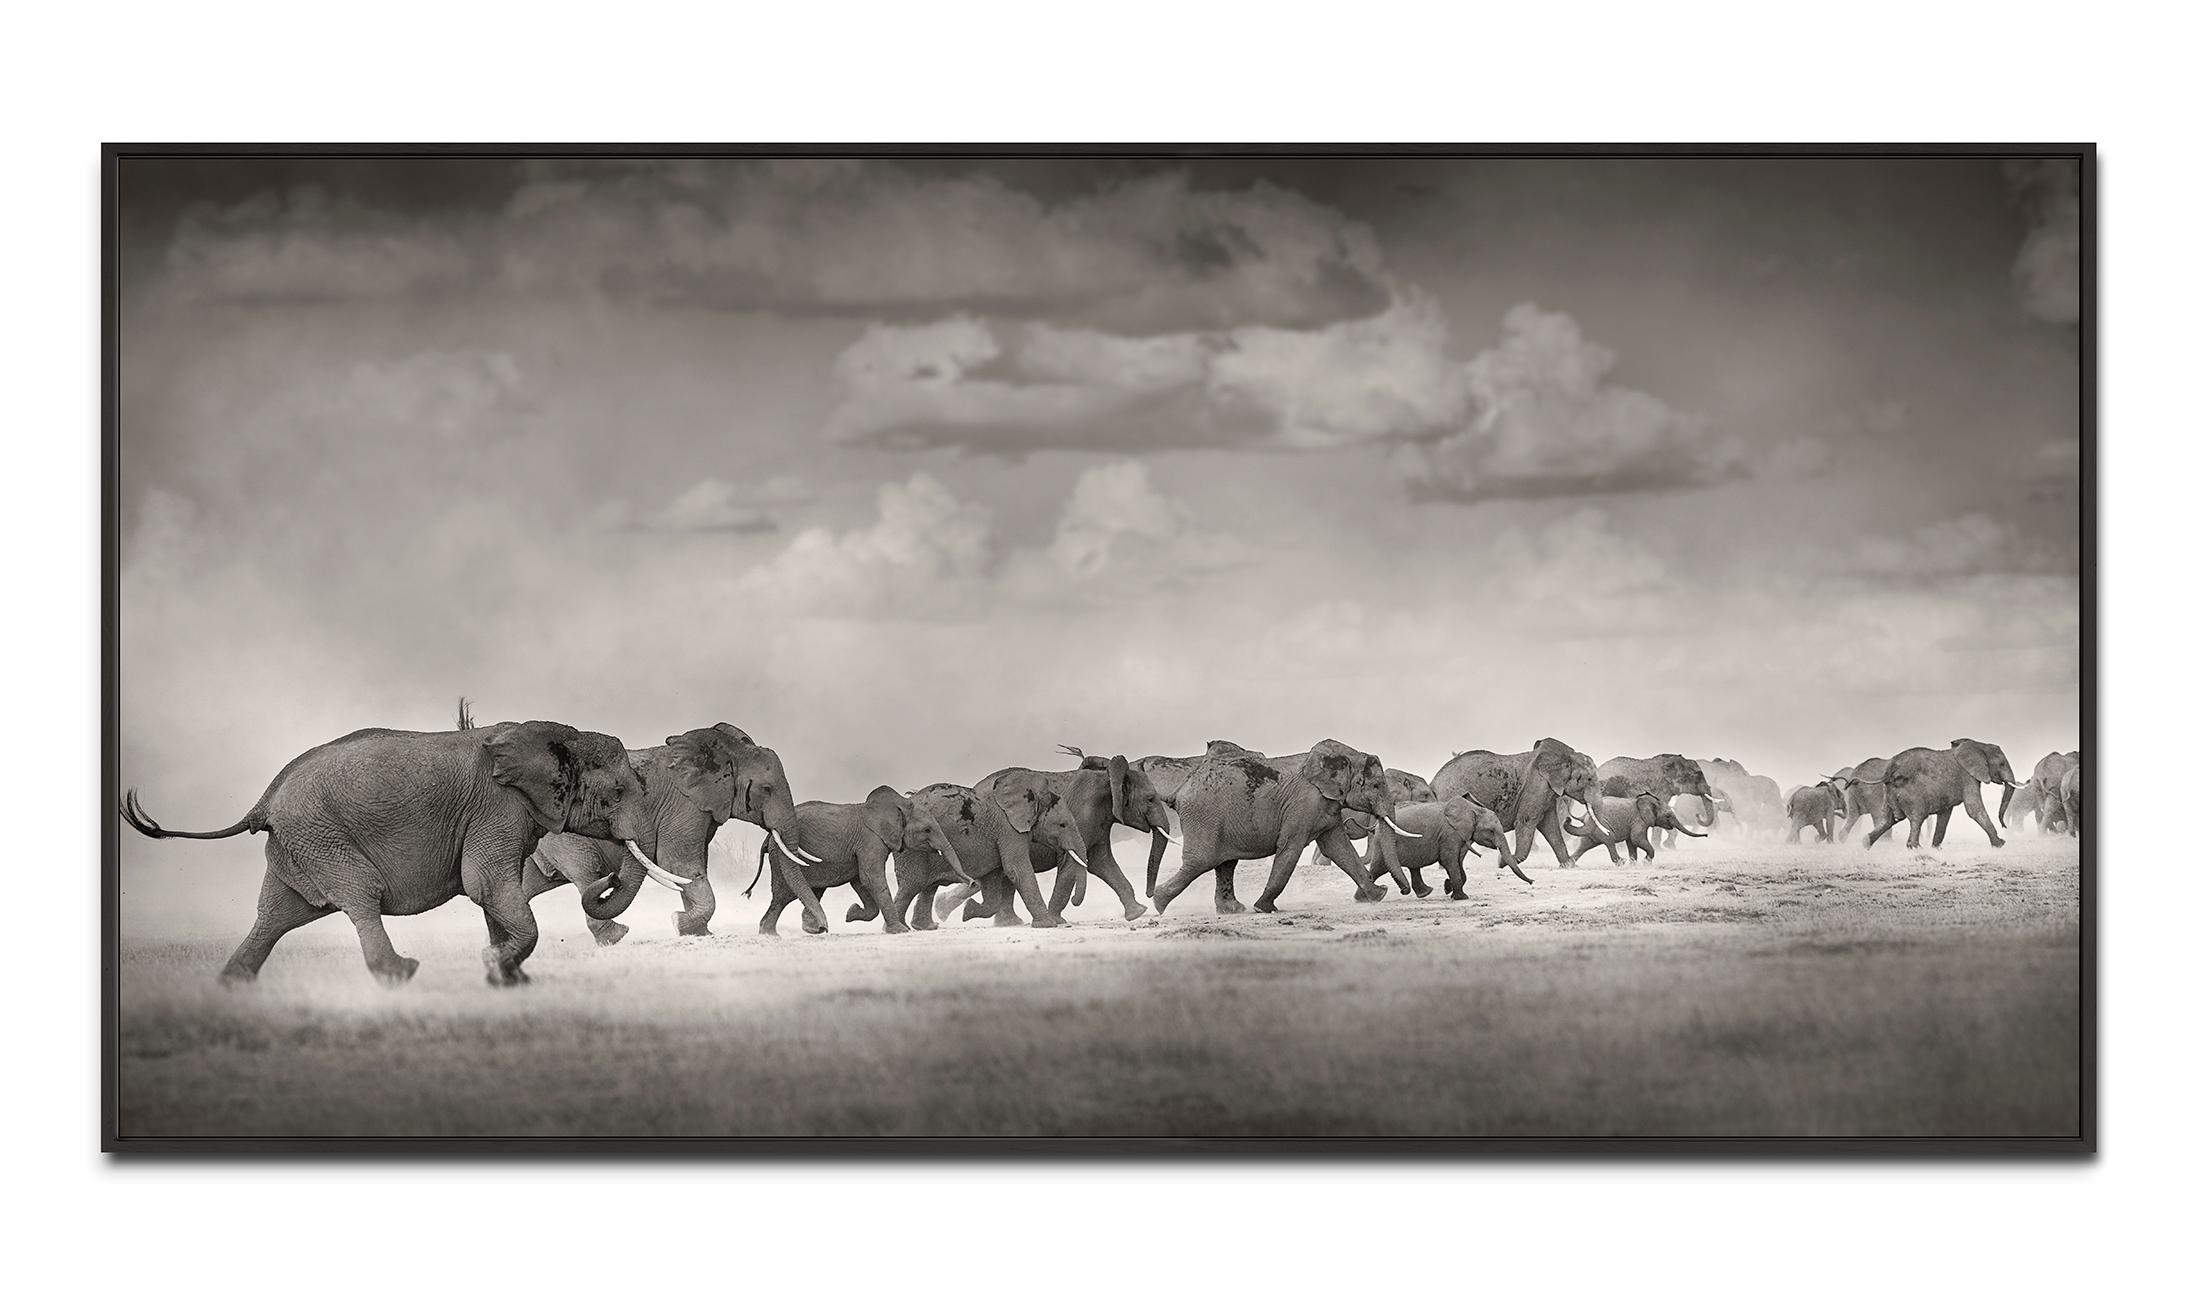 Thunderstorm I, Kenya 2019, Elephant, wildlife, b&w photography - Photograph by Joachim Schmeisser